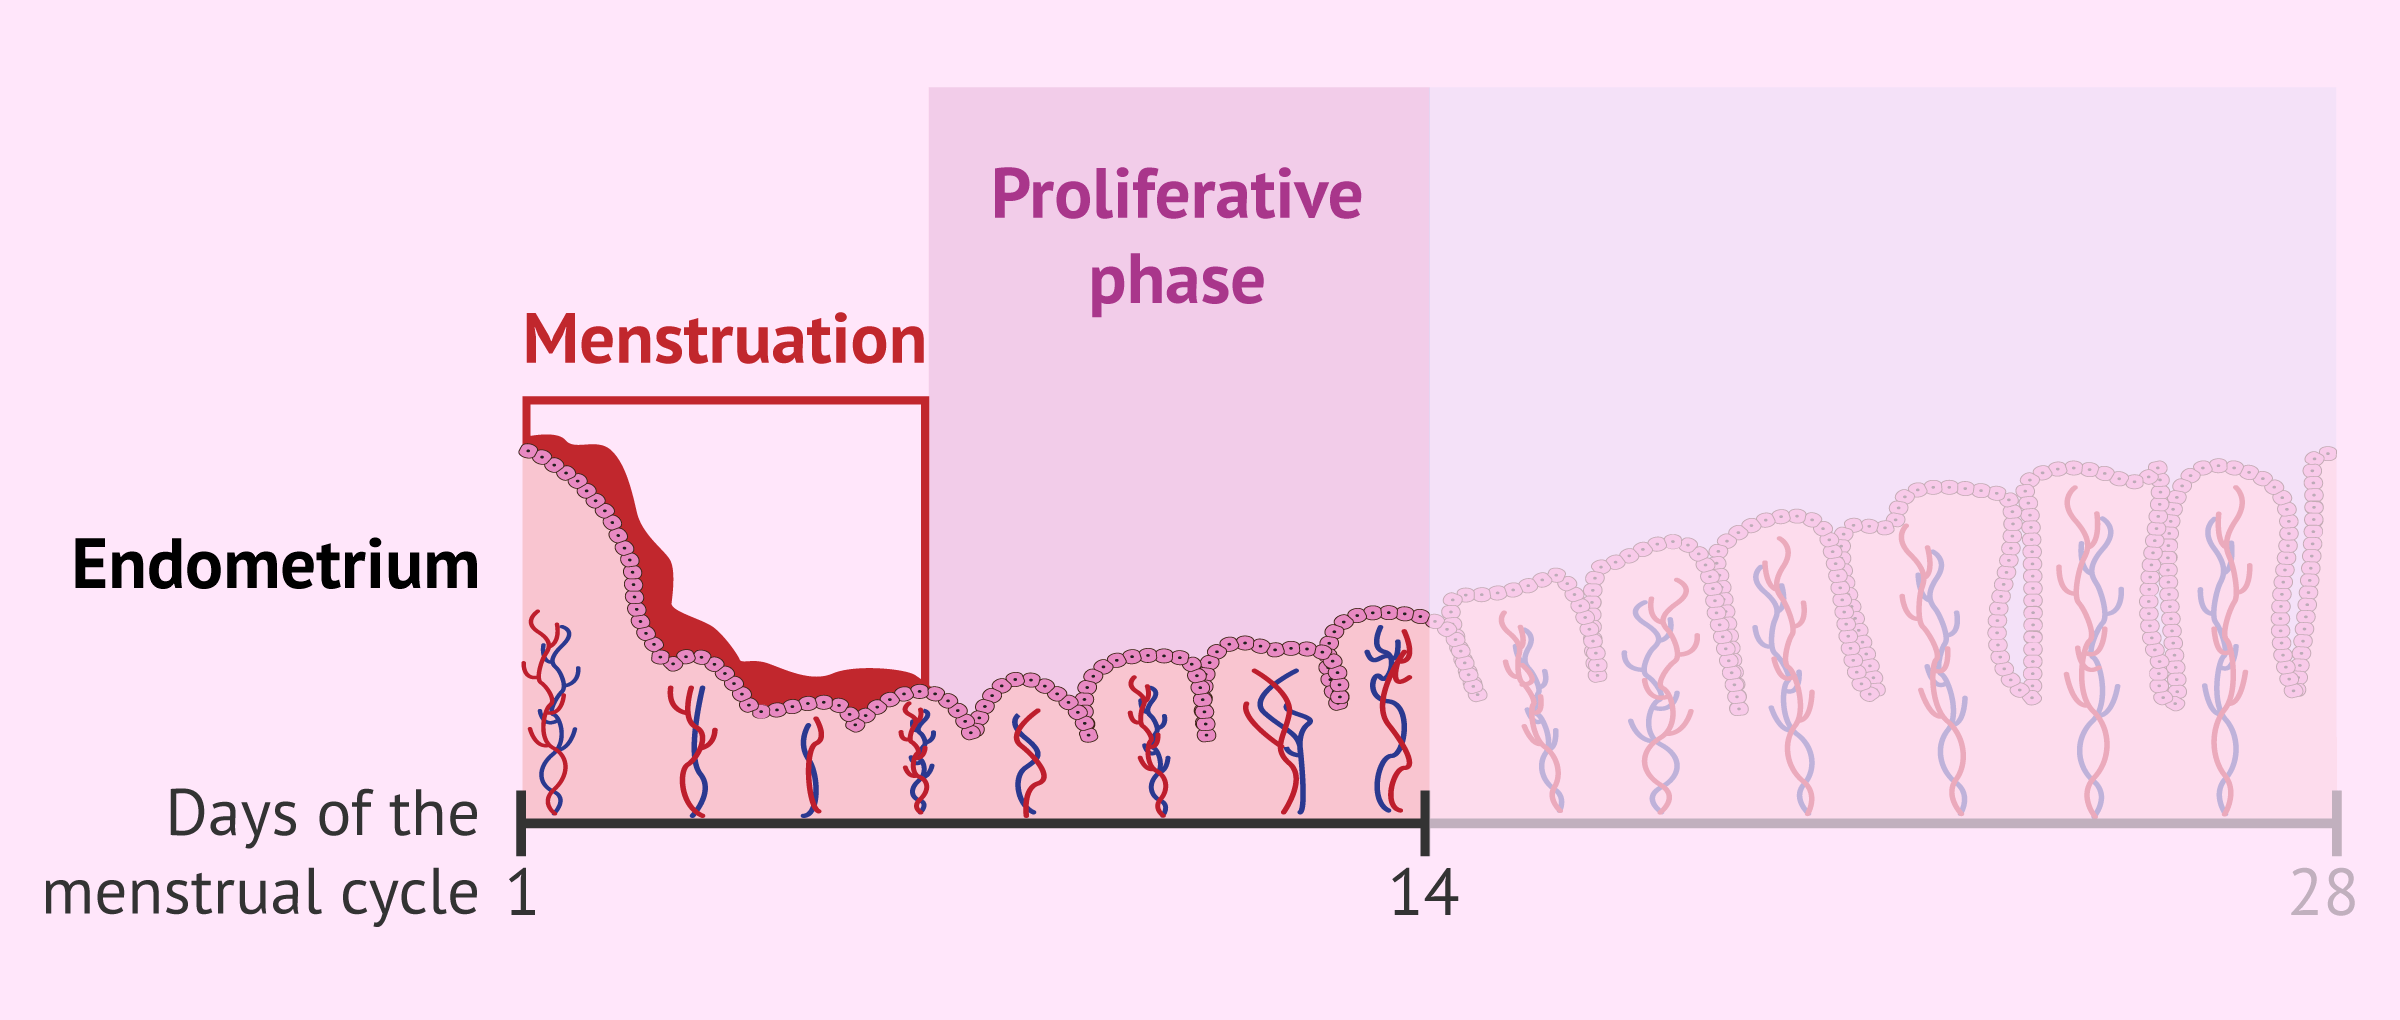 Proliferative phase in the uterine endometrium